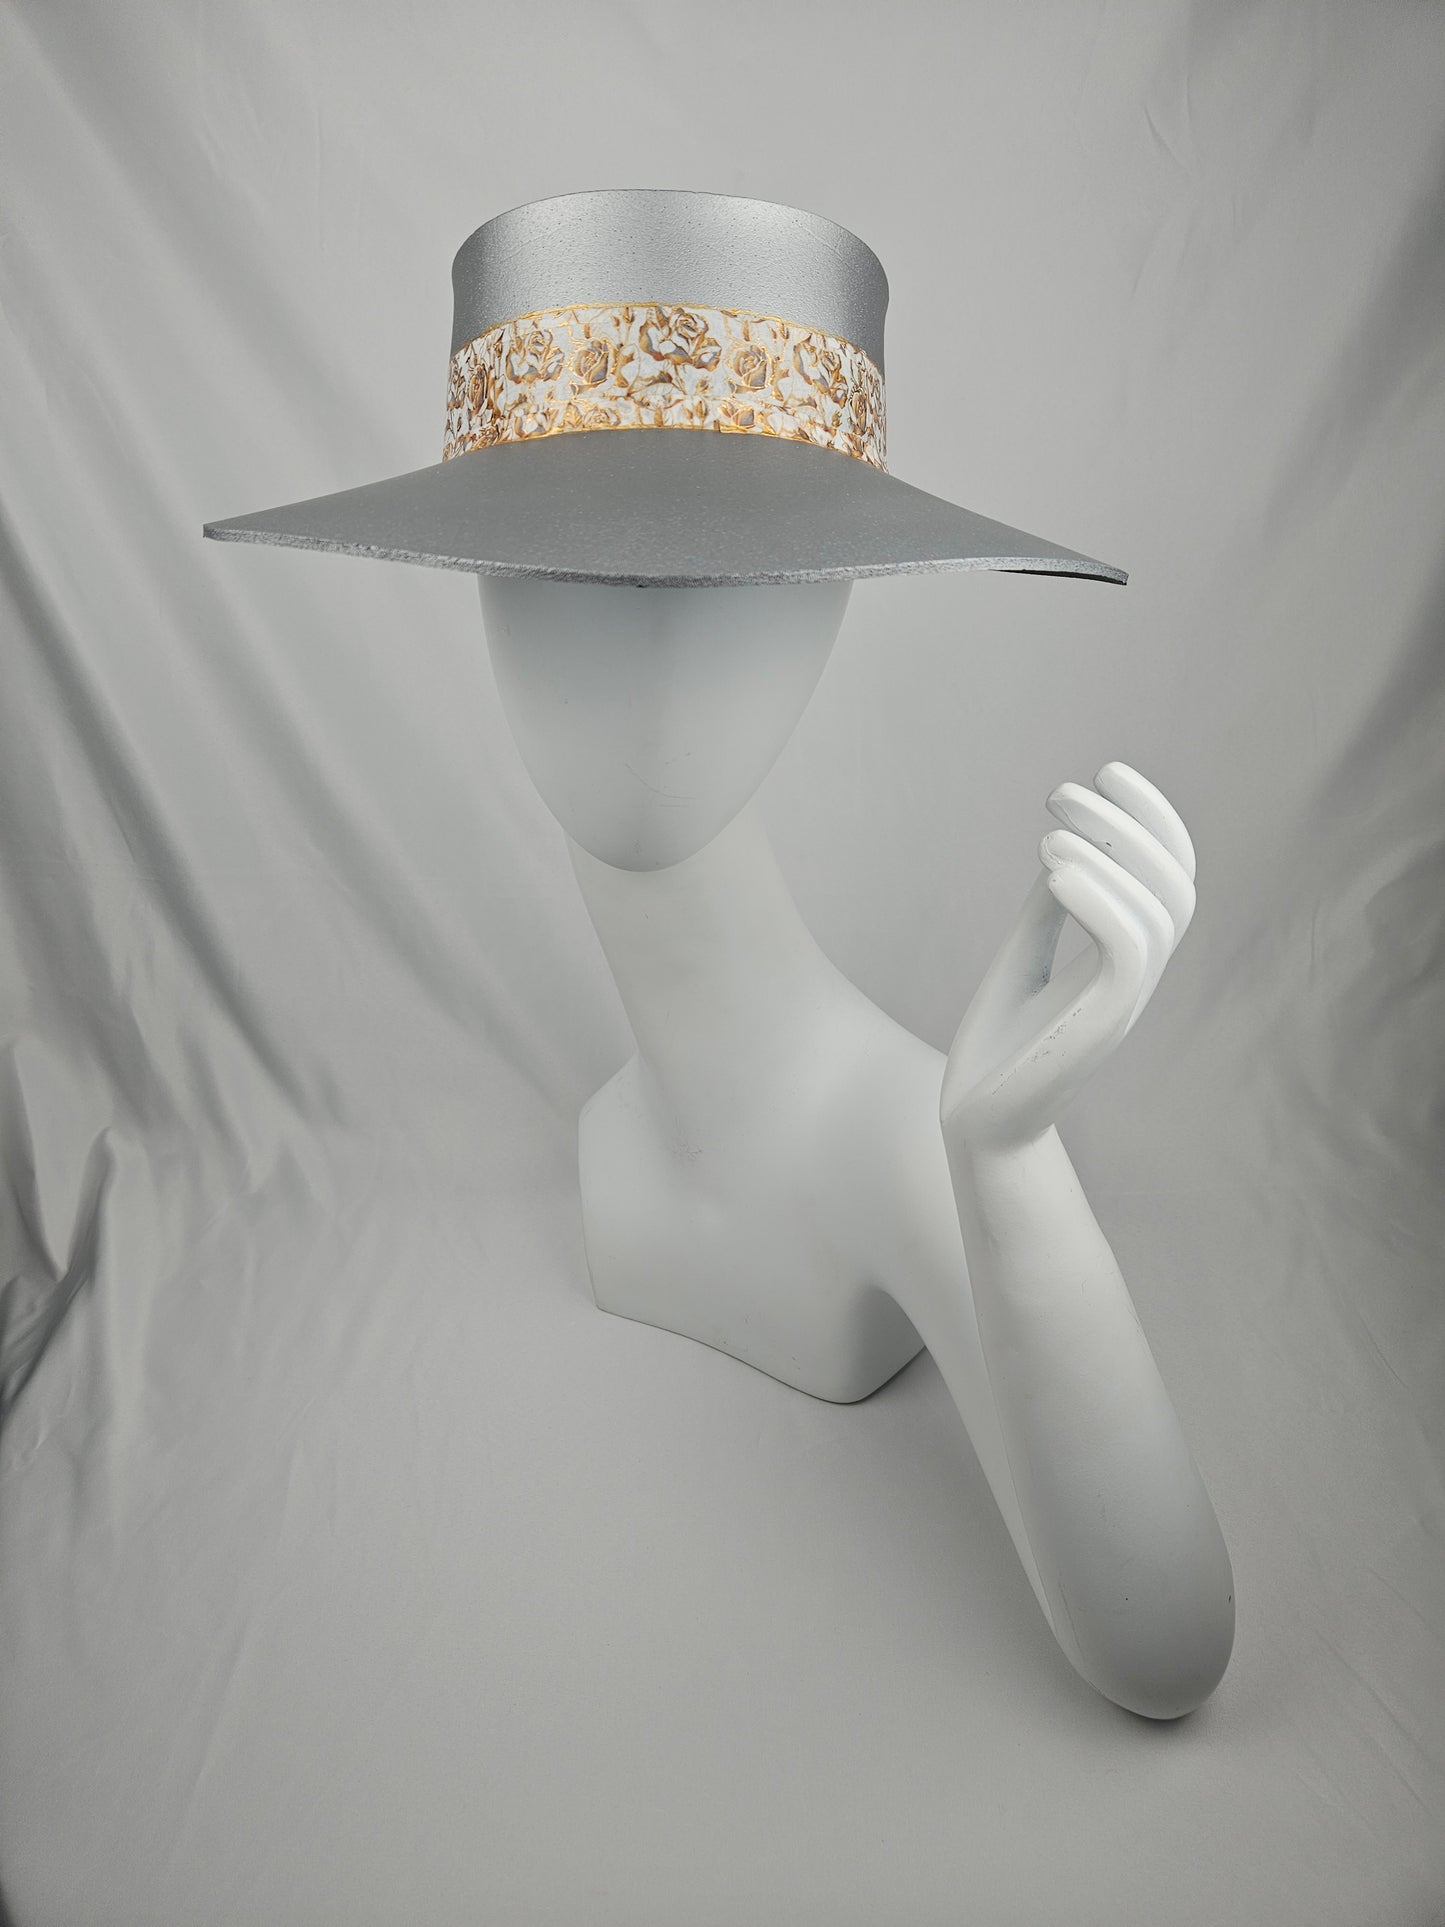 Trending Silver Audrey Foam Sun Visor Hat with Elegant Golden Floral Band and Handpainted Floral Motif: Church, Brunch, Derby, Garden, Beach, Pool, Asian, No Headache